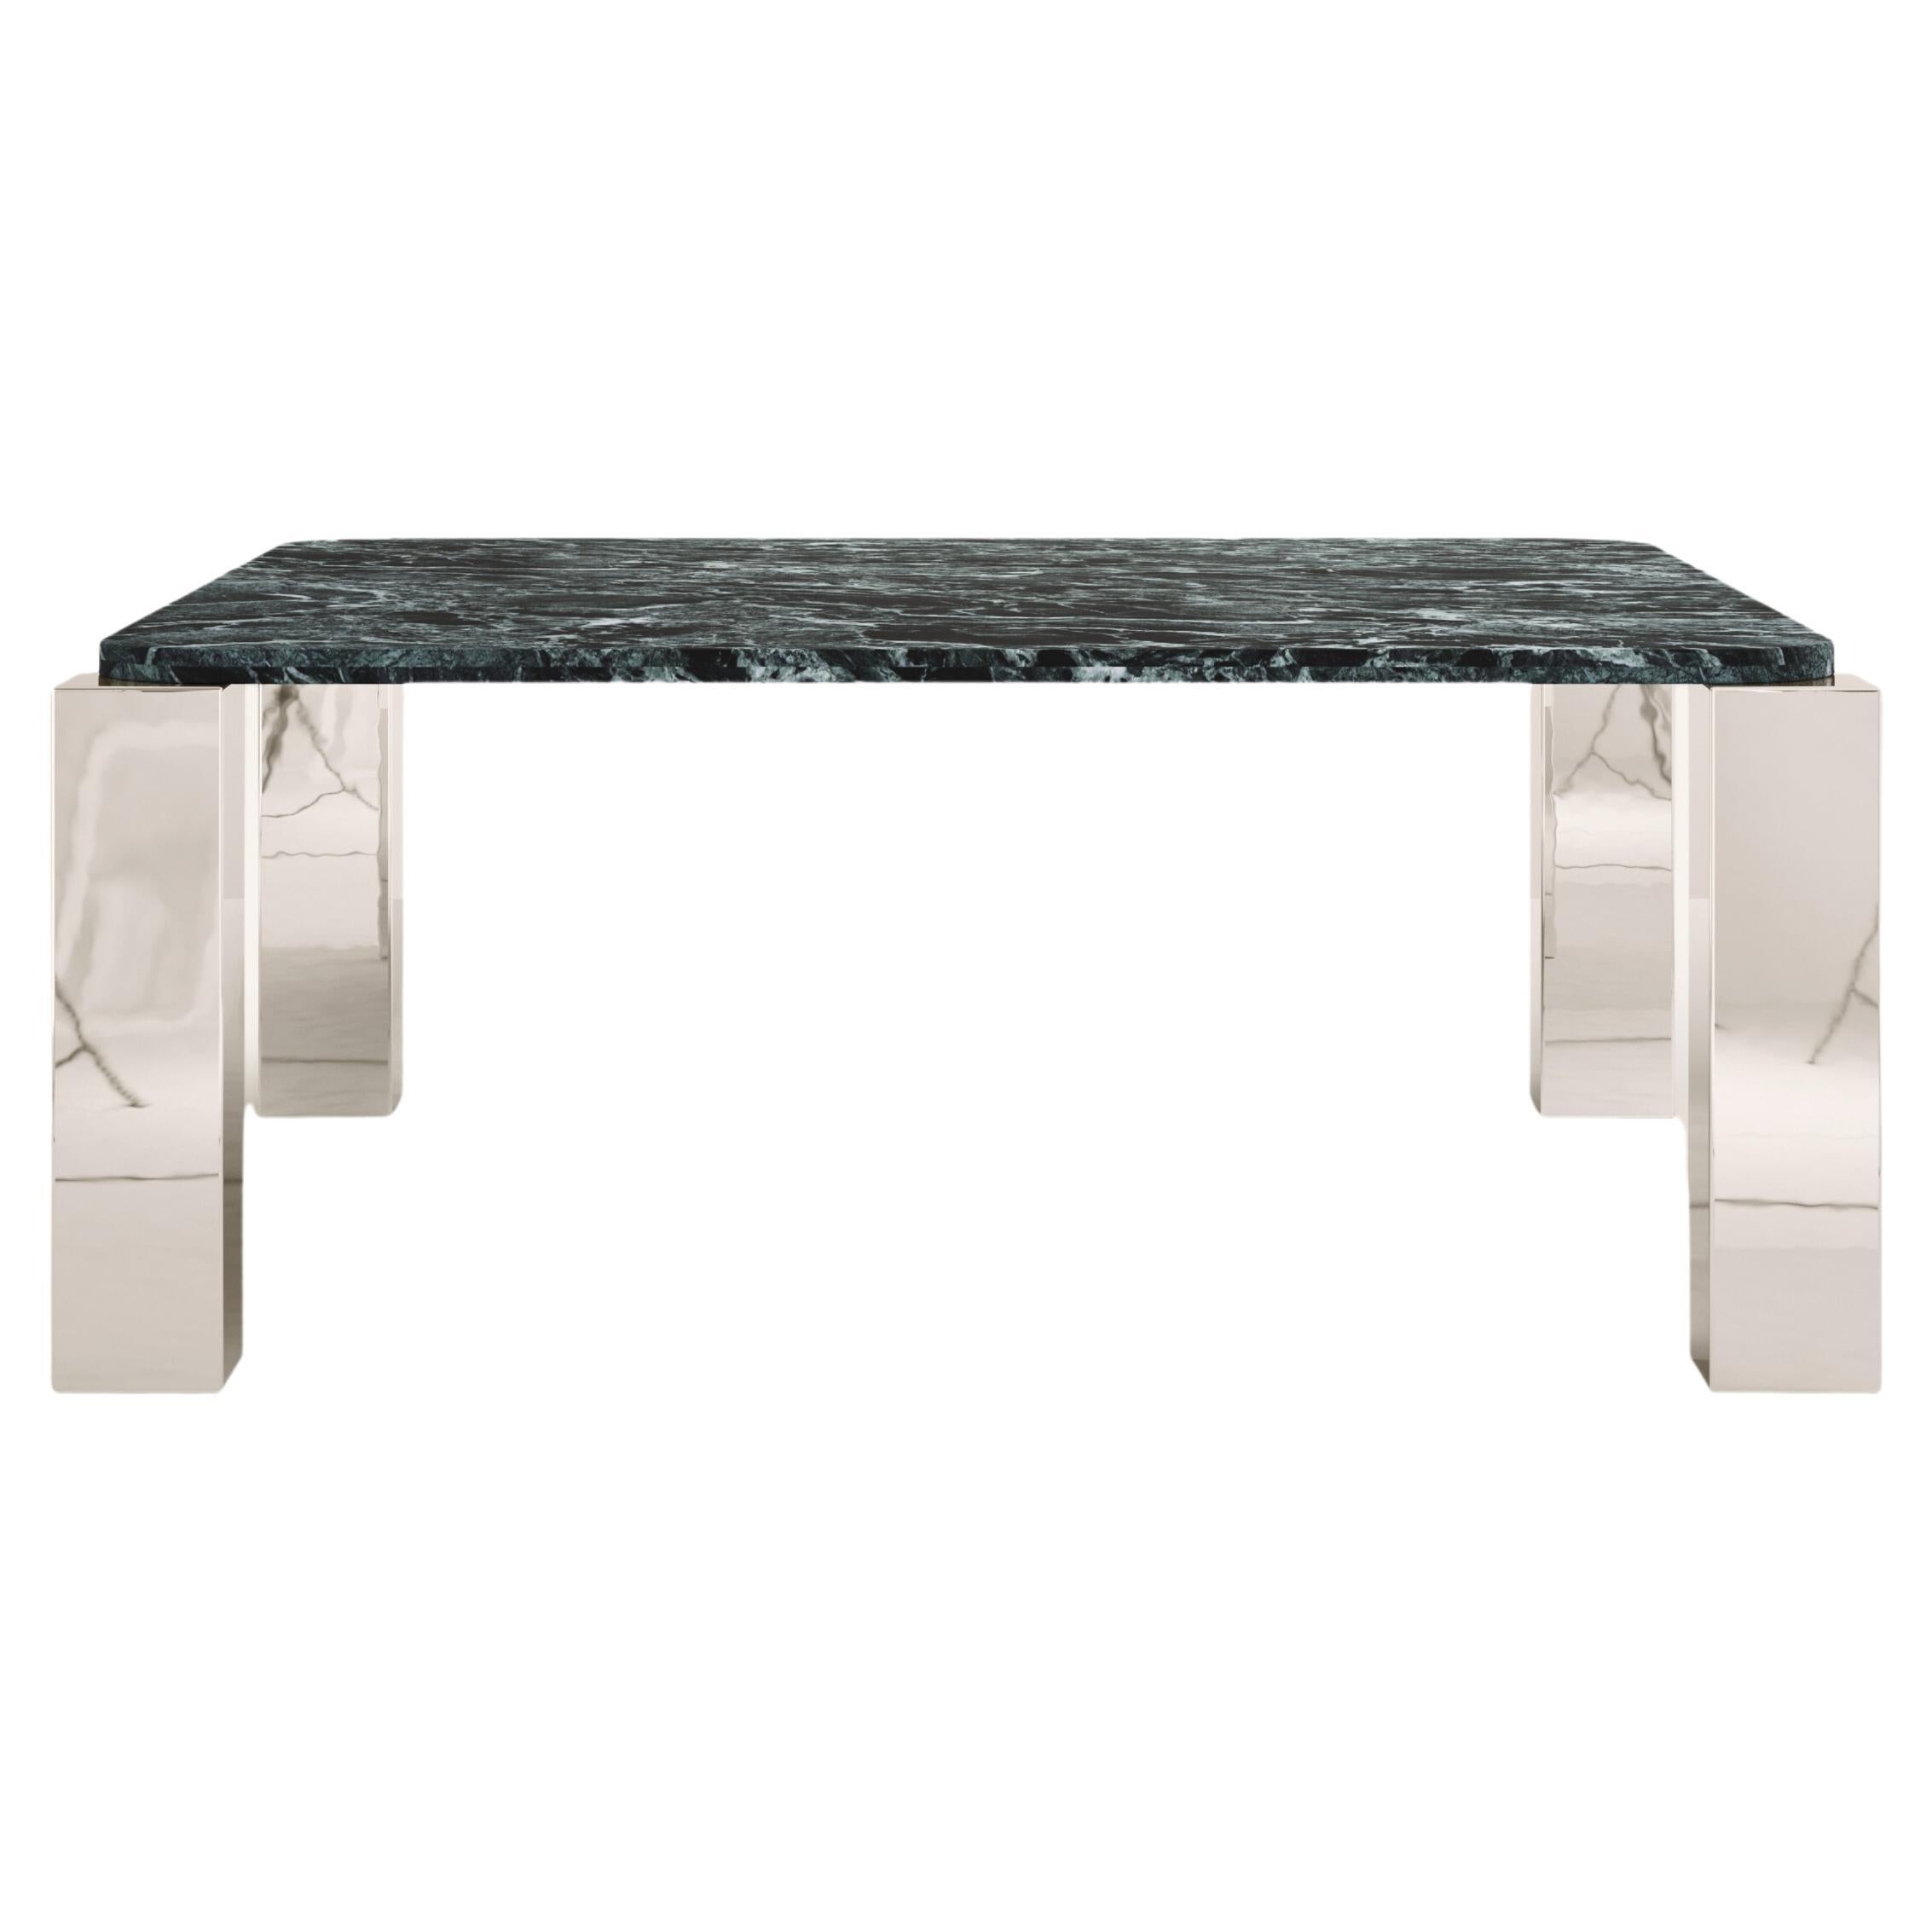 FORM(LA) Cubo Square Dining Table 74”L x 74”W x 30”H Verde Alpi Marble & Chrome For Sale